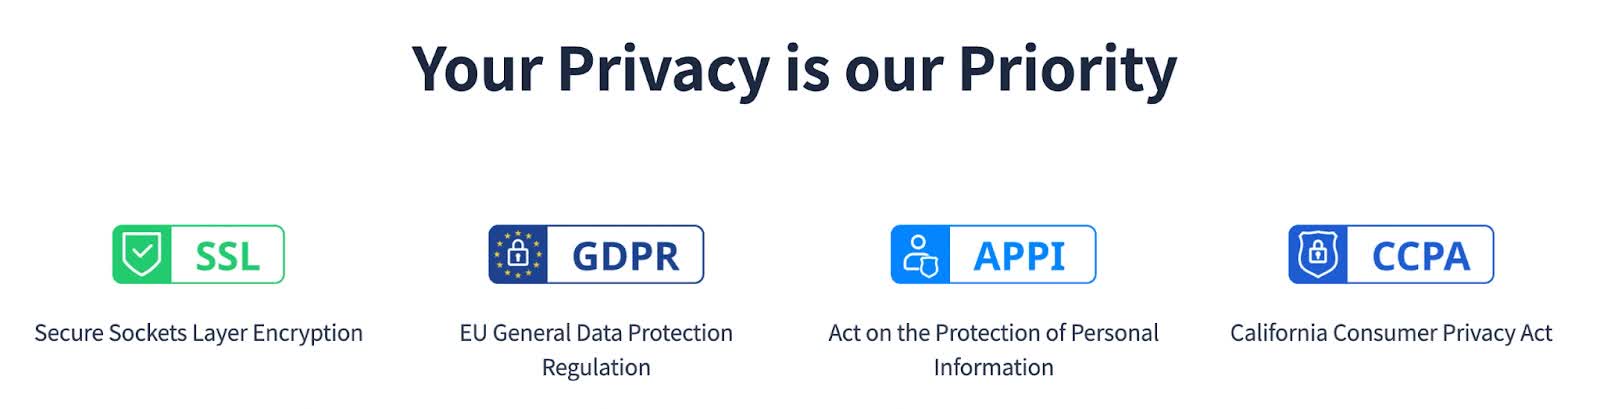 Notta’s privacy policy